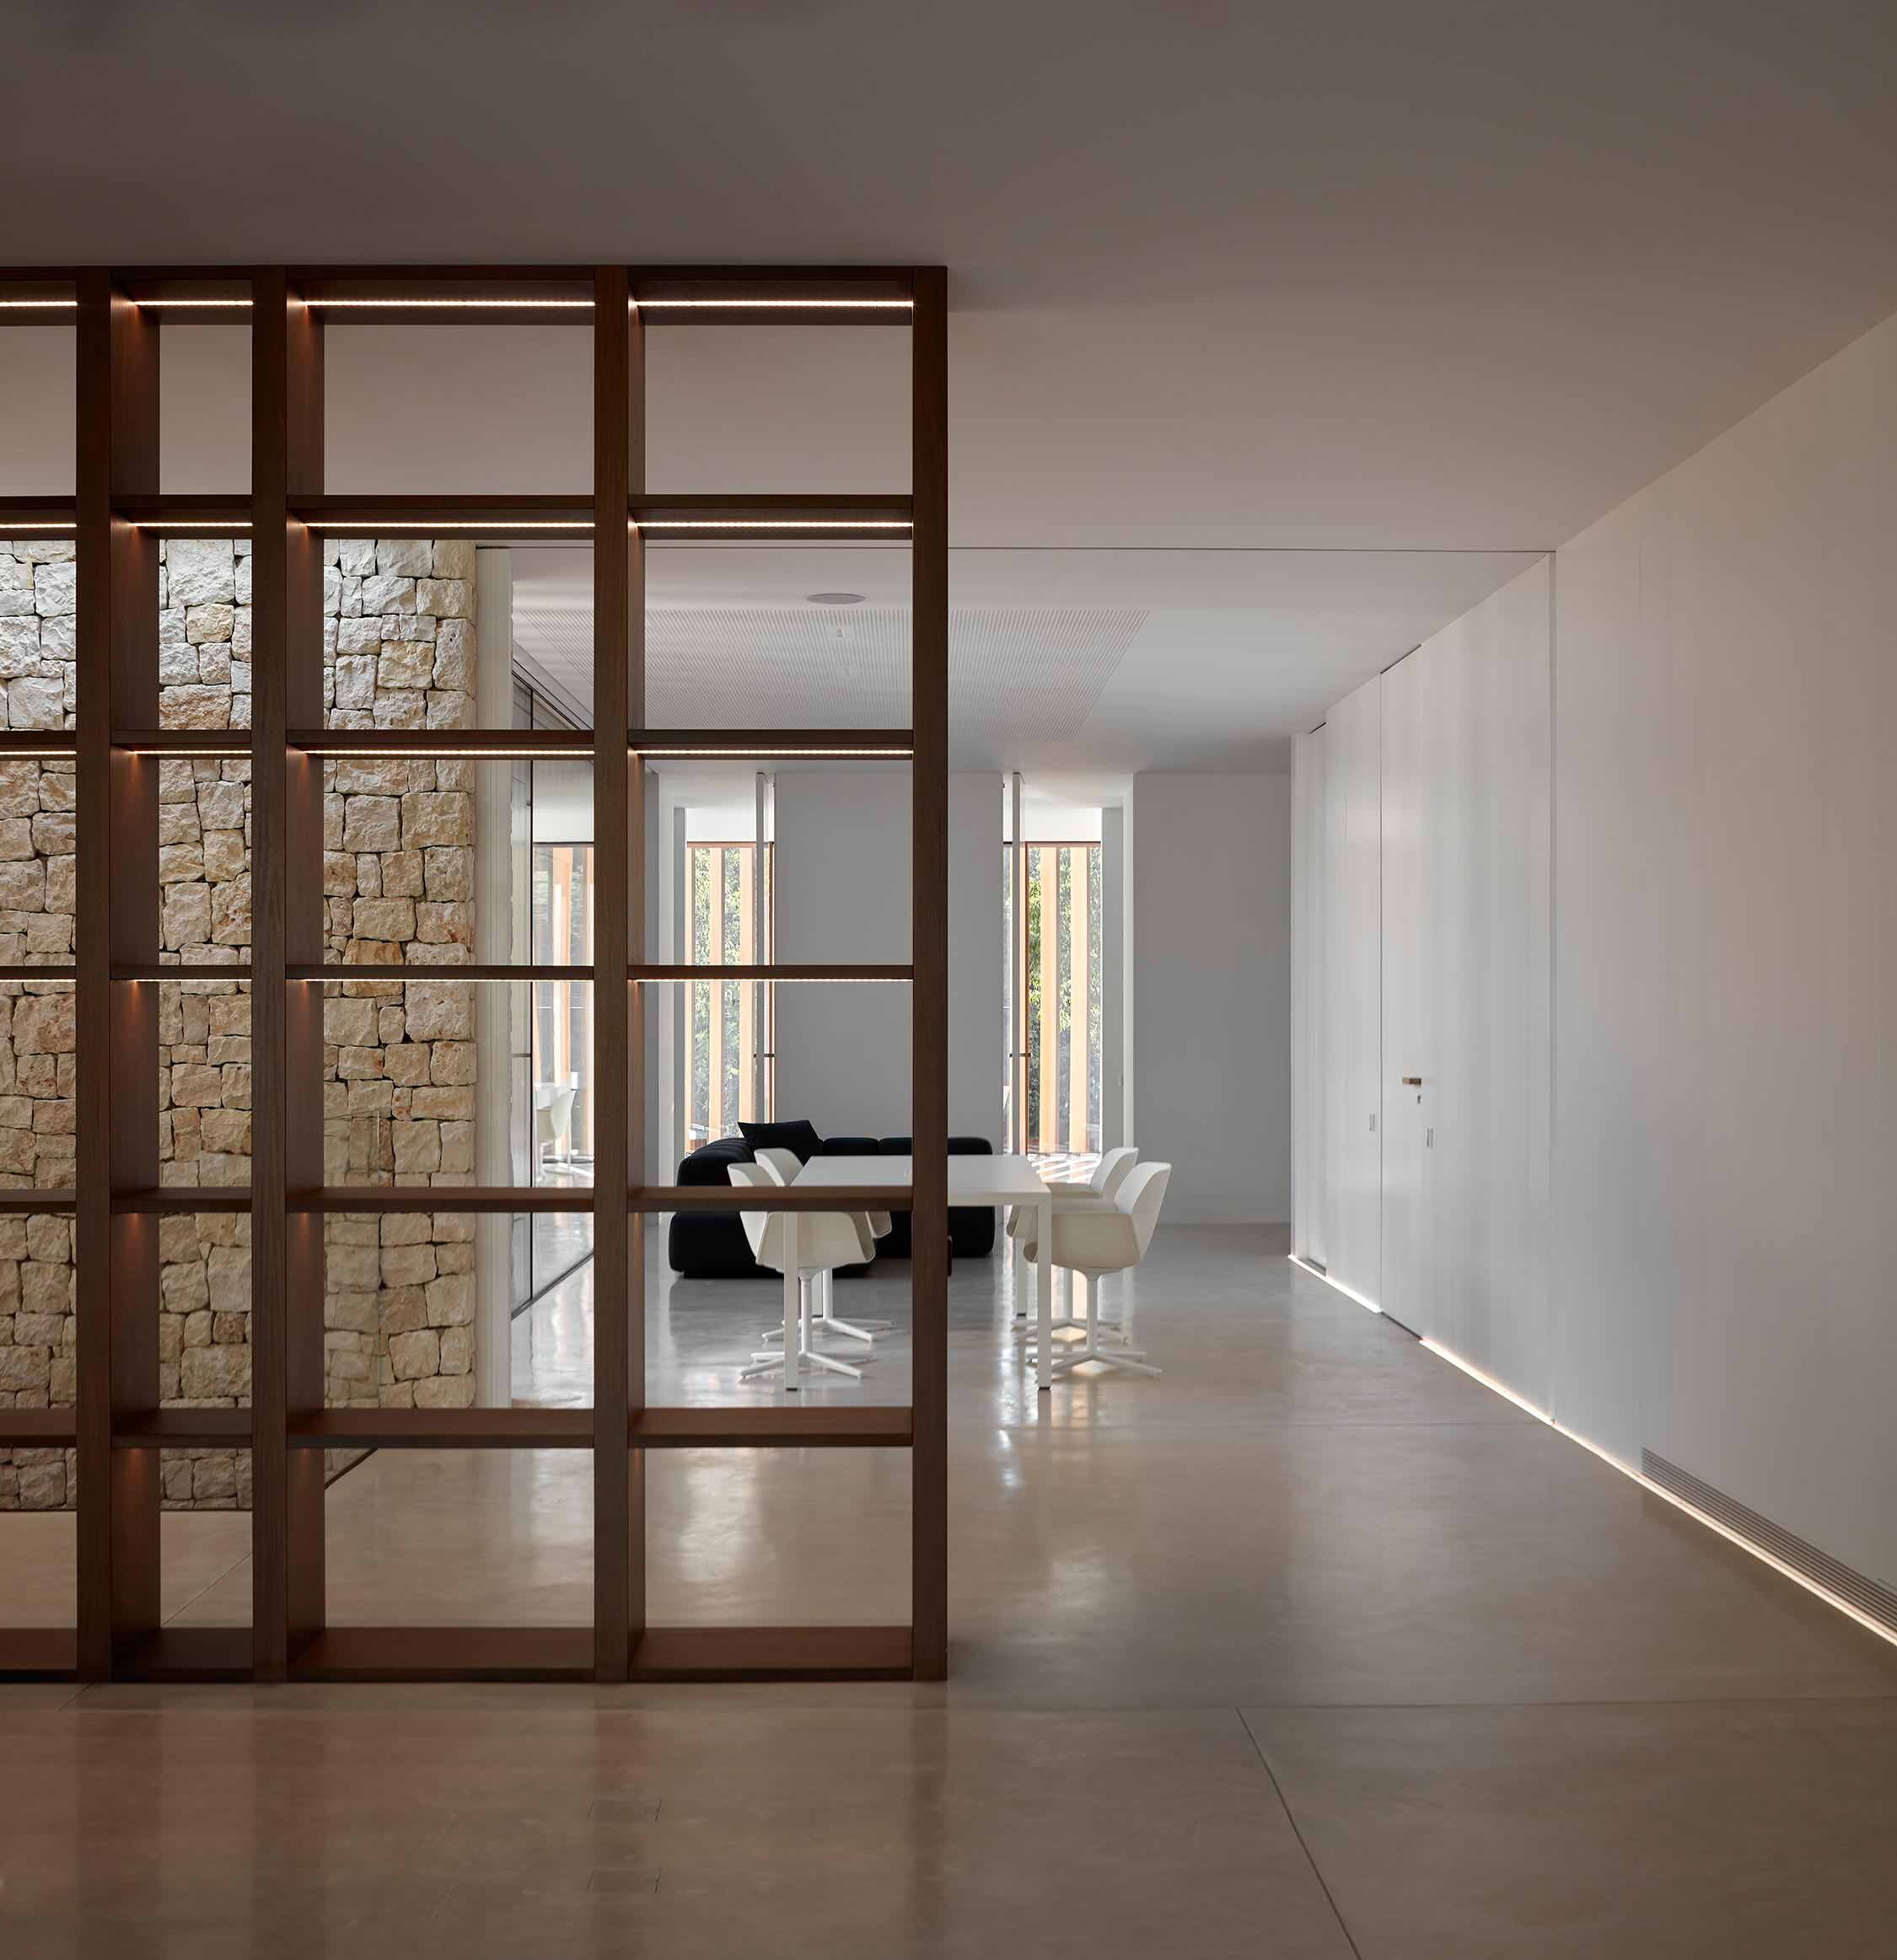 Ramon Esteve Estudio - House in La Cañada-Visual Atelier 8-Architecture-8.jpg